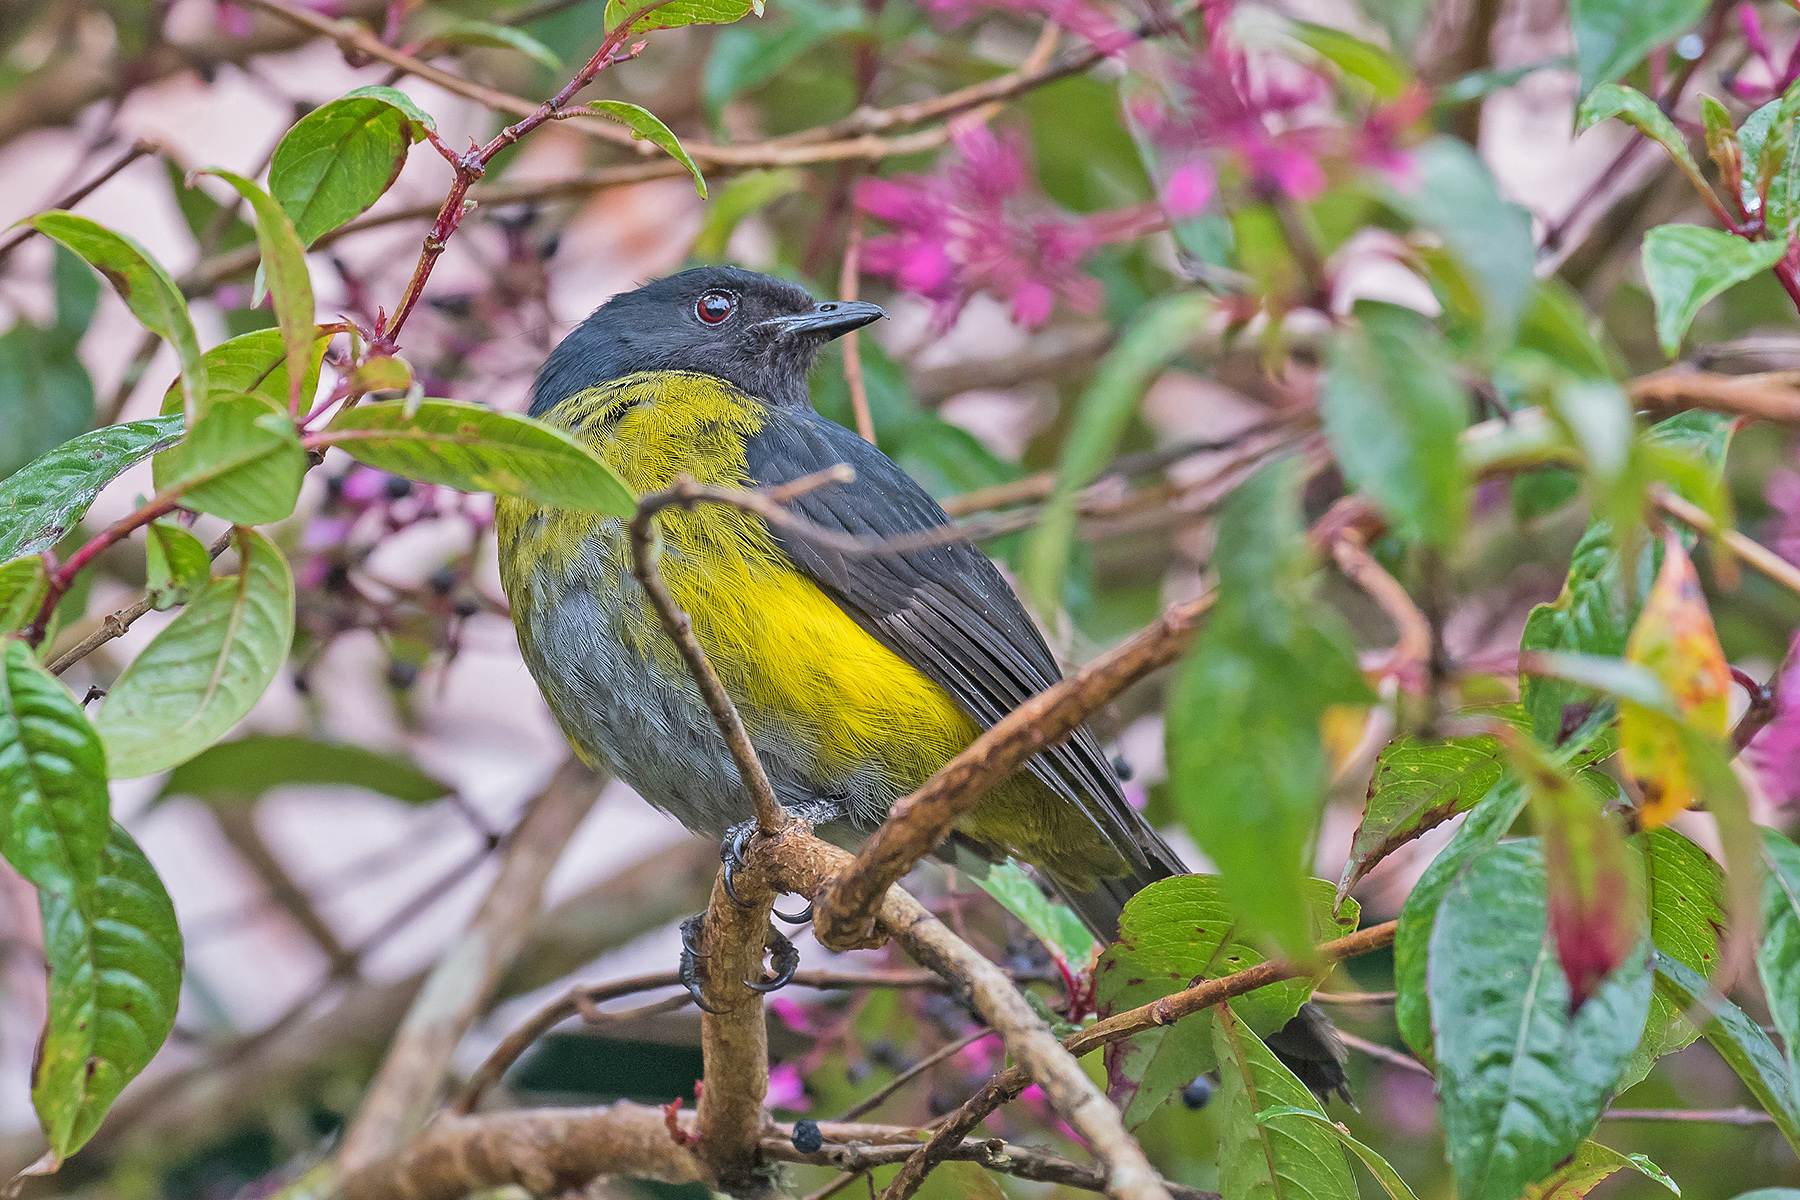 Black-and-yellow Phainoptila on our Costa Rica birding tour (image by Pete Morris)